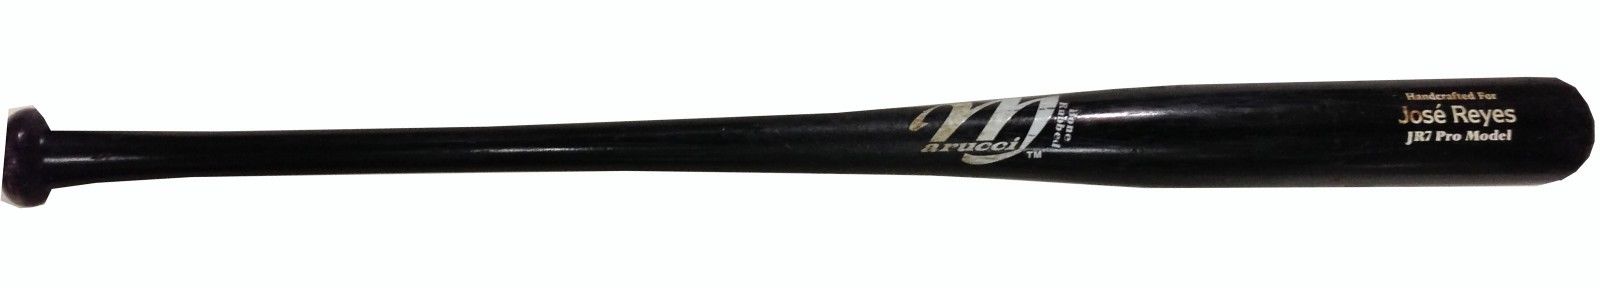 Jose Reyes Game Used Baseball Bat New York Mets Marucci JR7 Pro Model 2008 COA